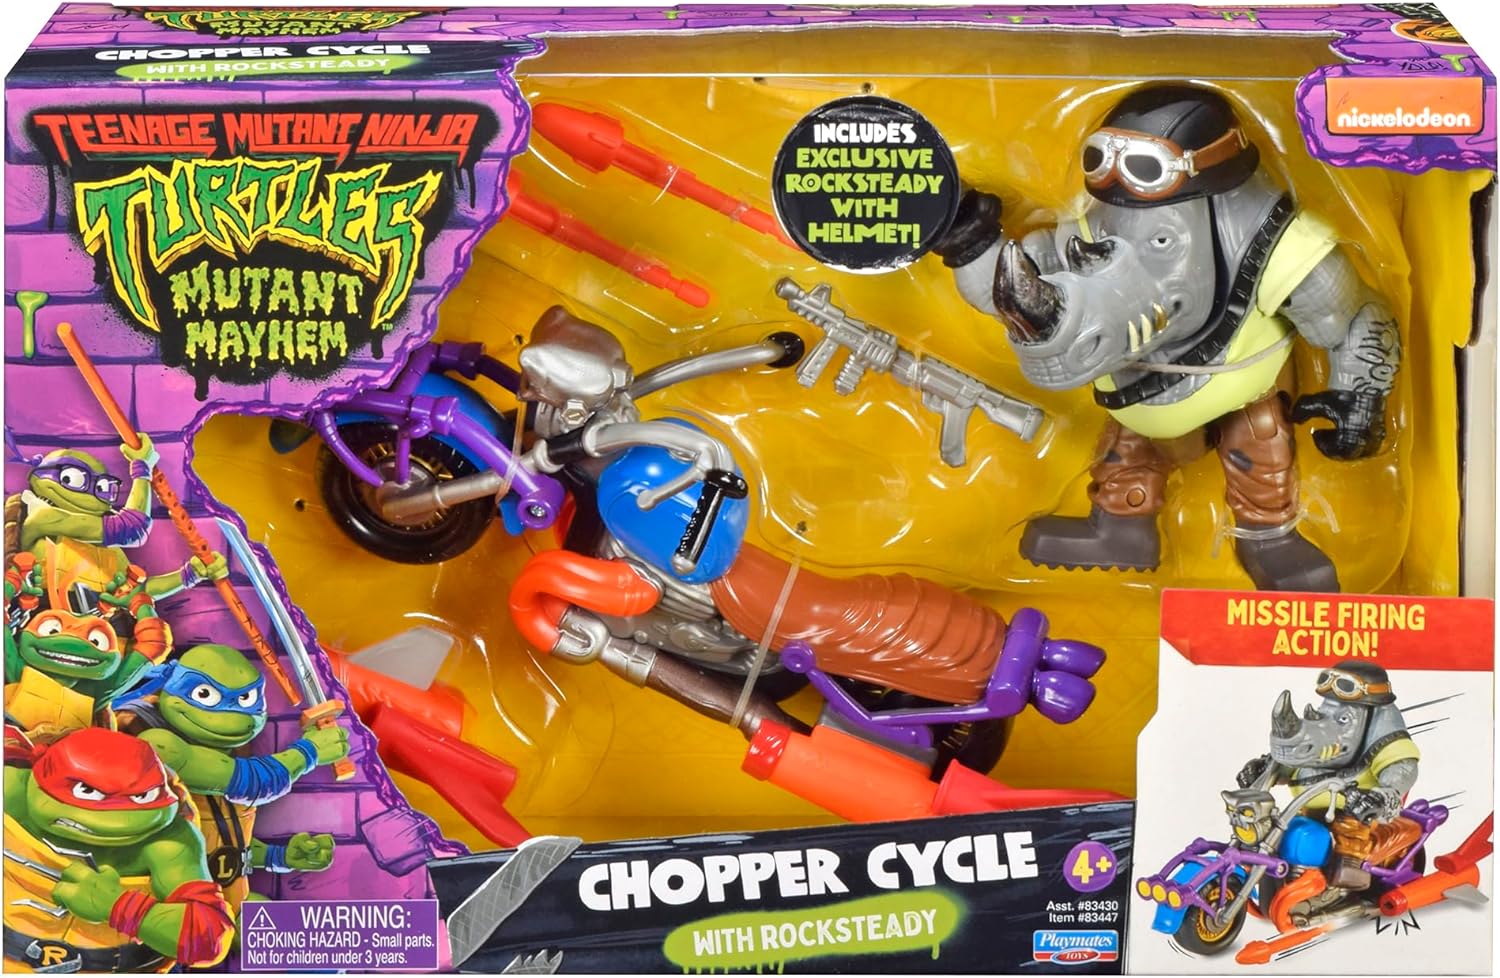 Teenage Mutant Ninja Turtles Mutant Mayhem Chopper Cycle with Exclusive Rocksteady Figure